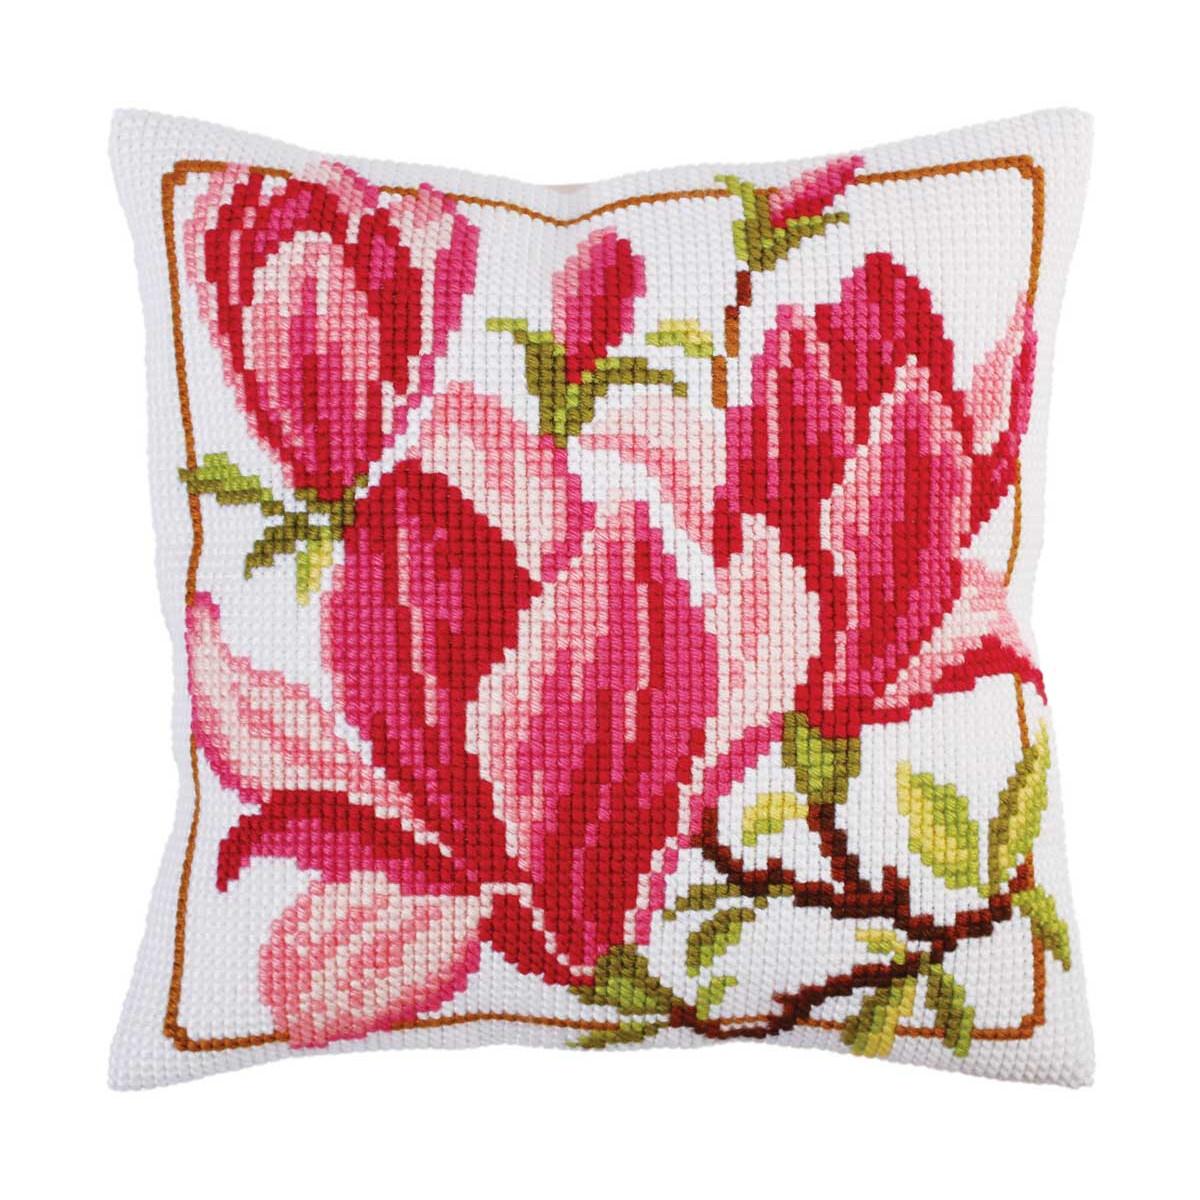 CdA stamped cross stitch kit cushion "Magnolia...